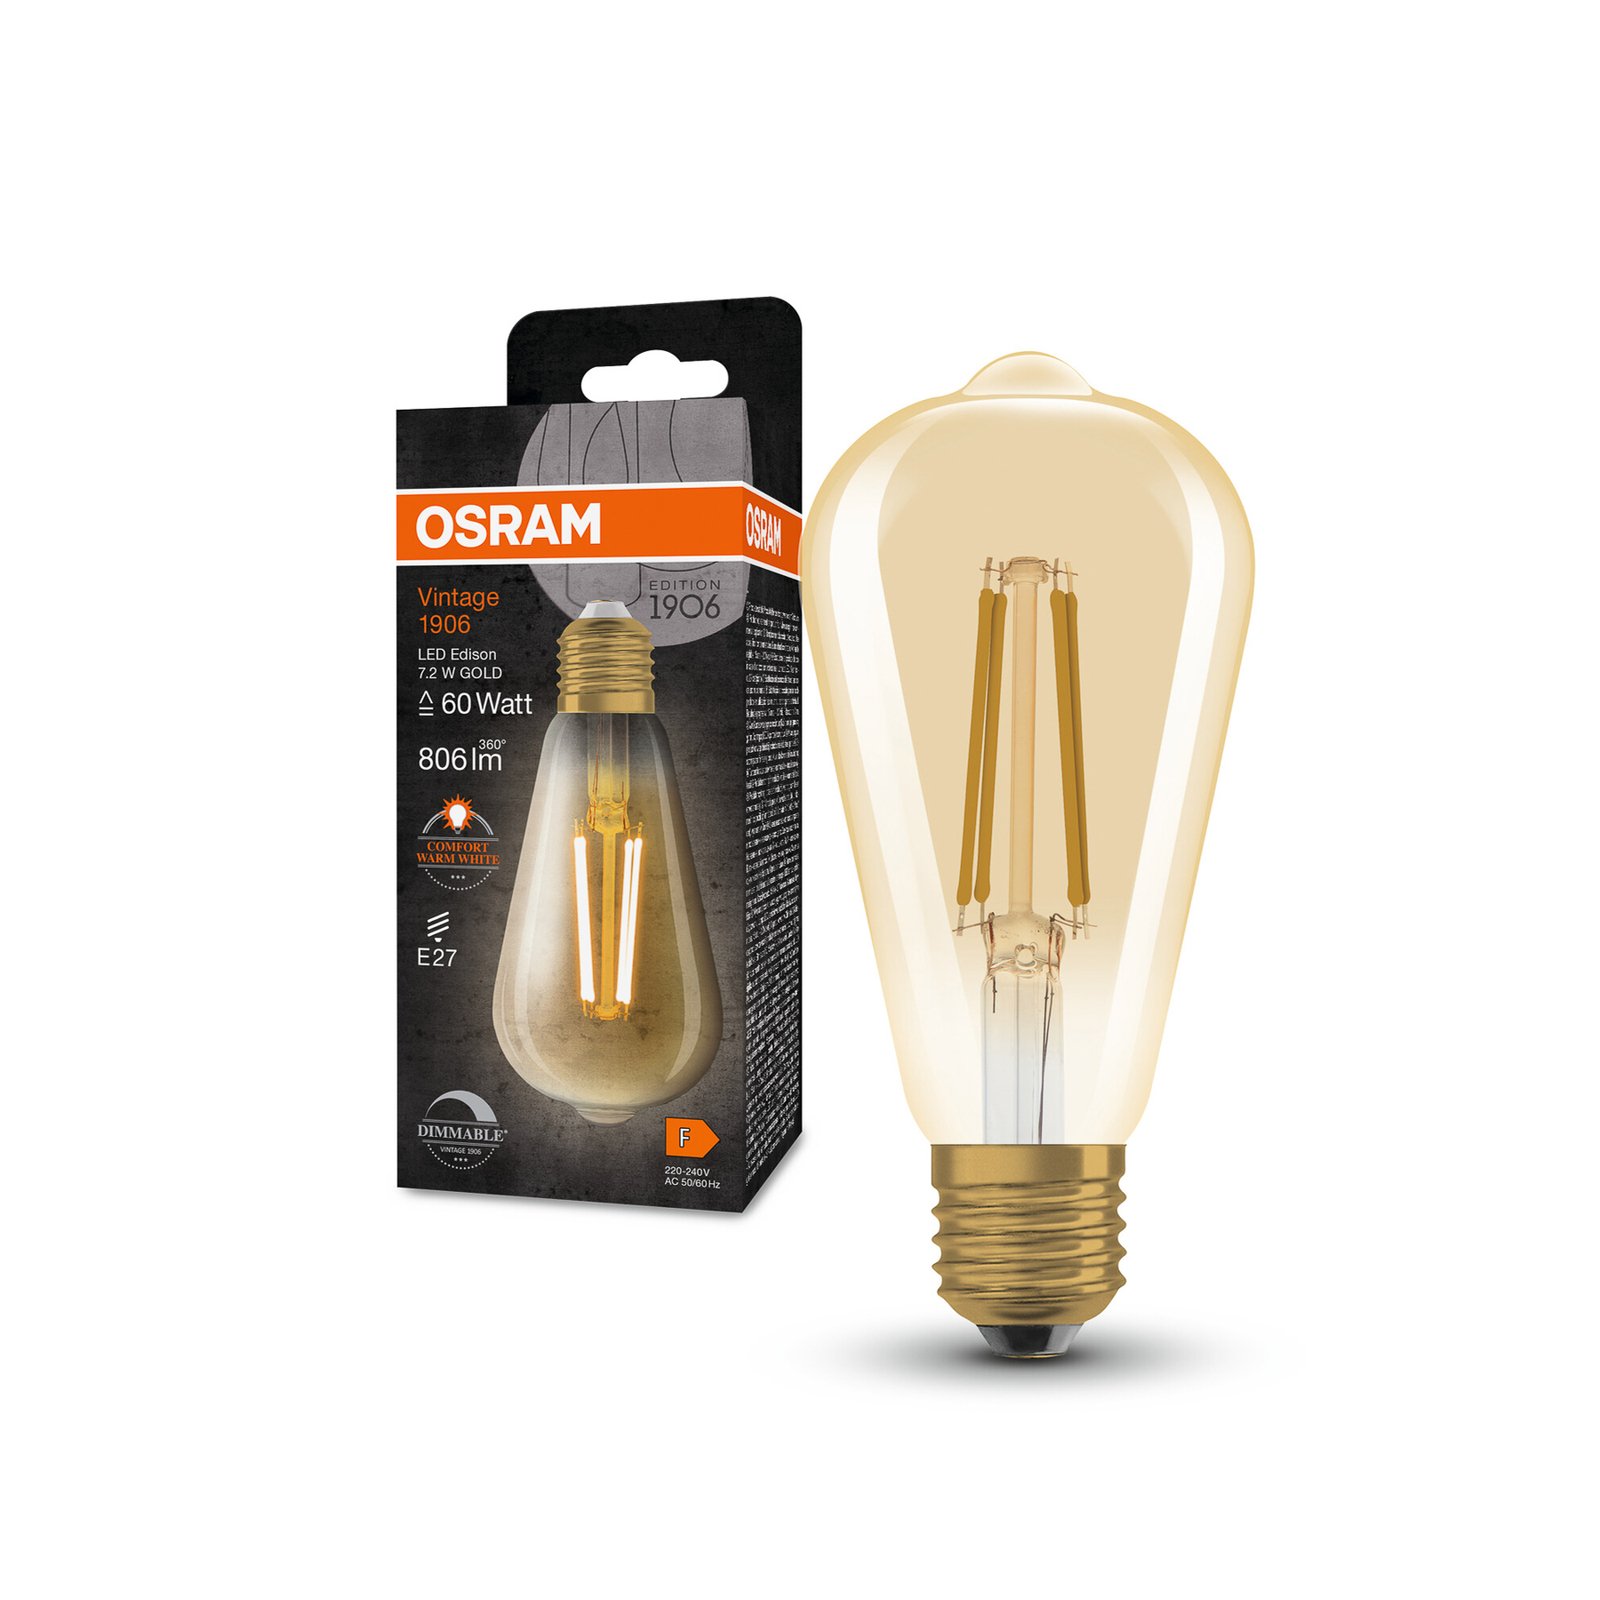 OSRAM LED Vintage 1906 Edison, guld, E27, 7,2 W, 824, dim.